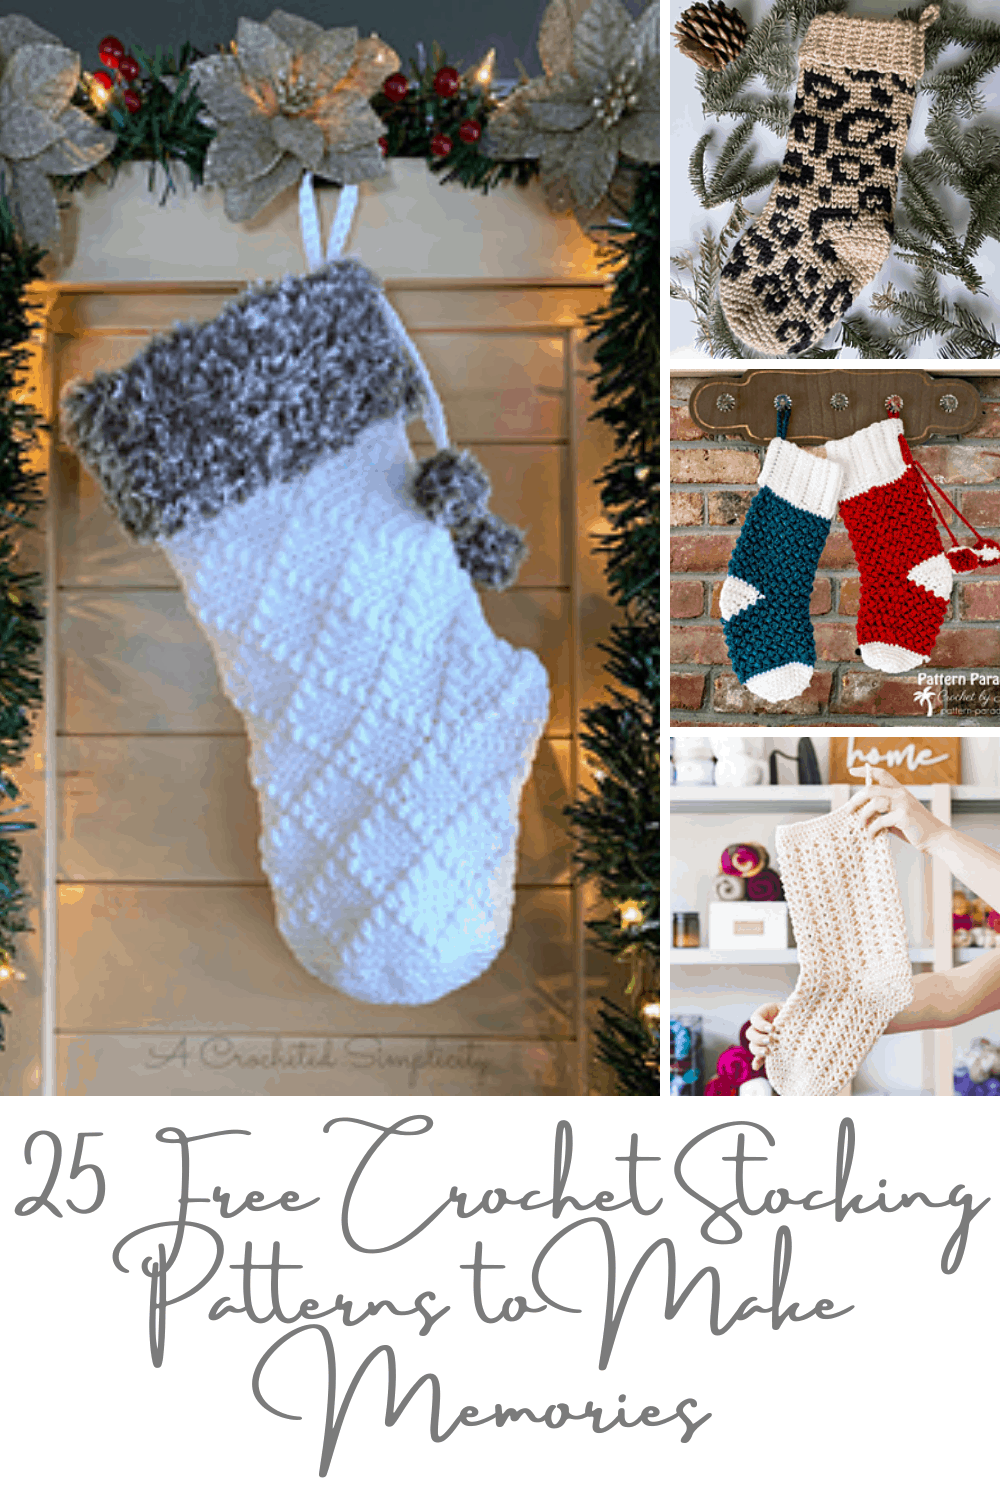 9 Free Crochet Stocking Patterns to Make Memories for 9 ...